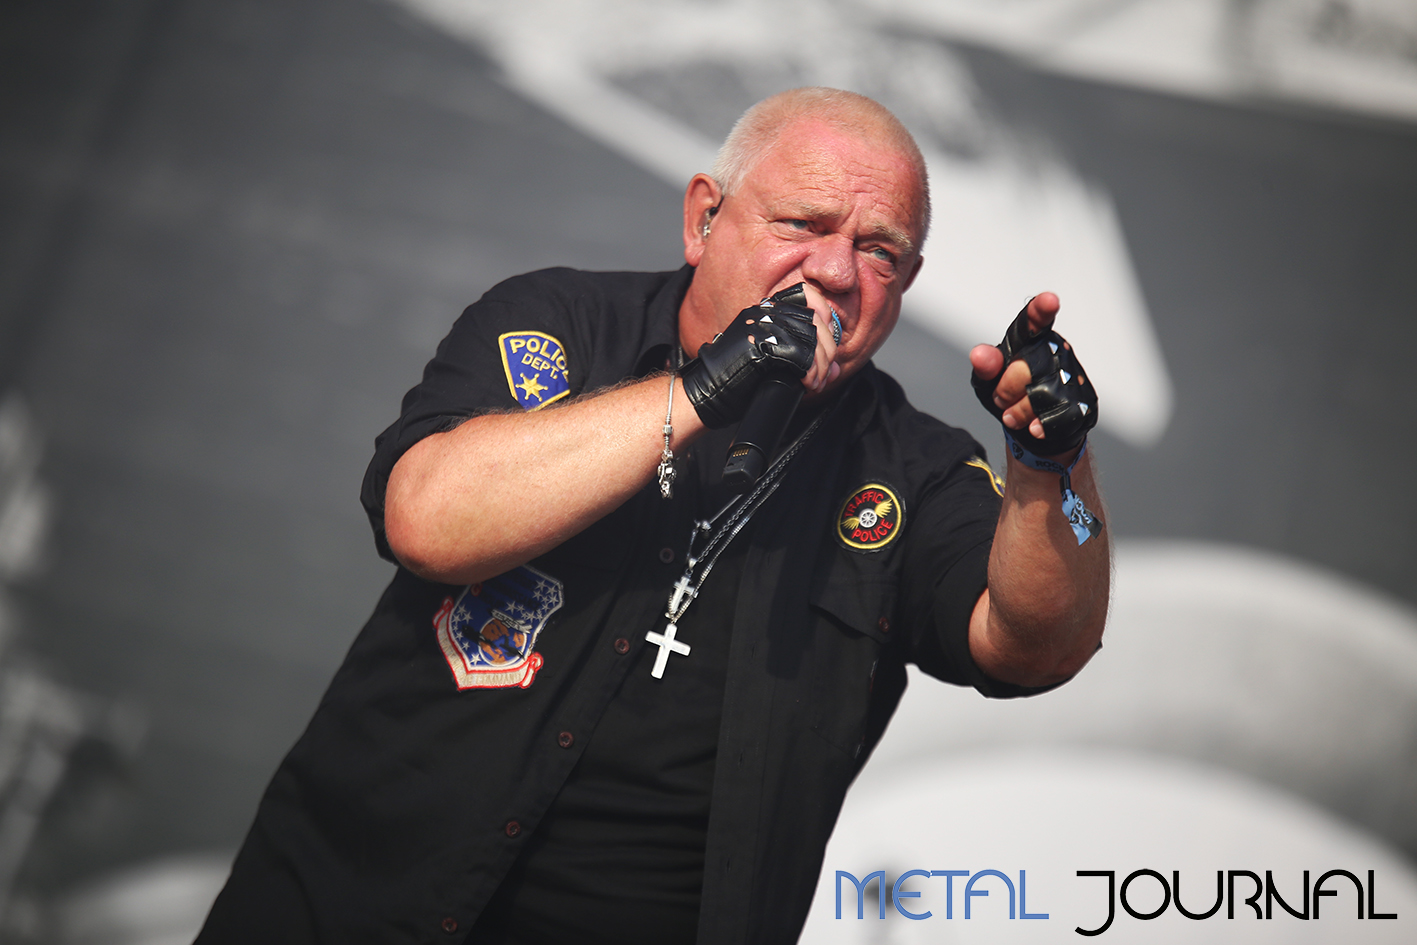 udo - metal journal rock fest barcelona 2019 pic 1